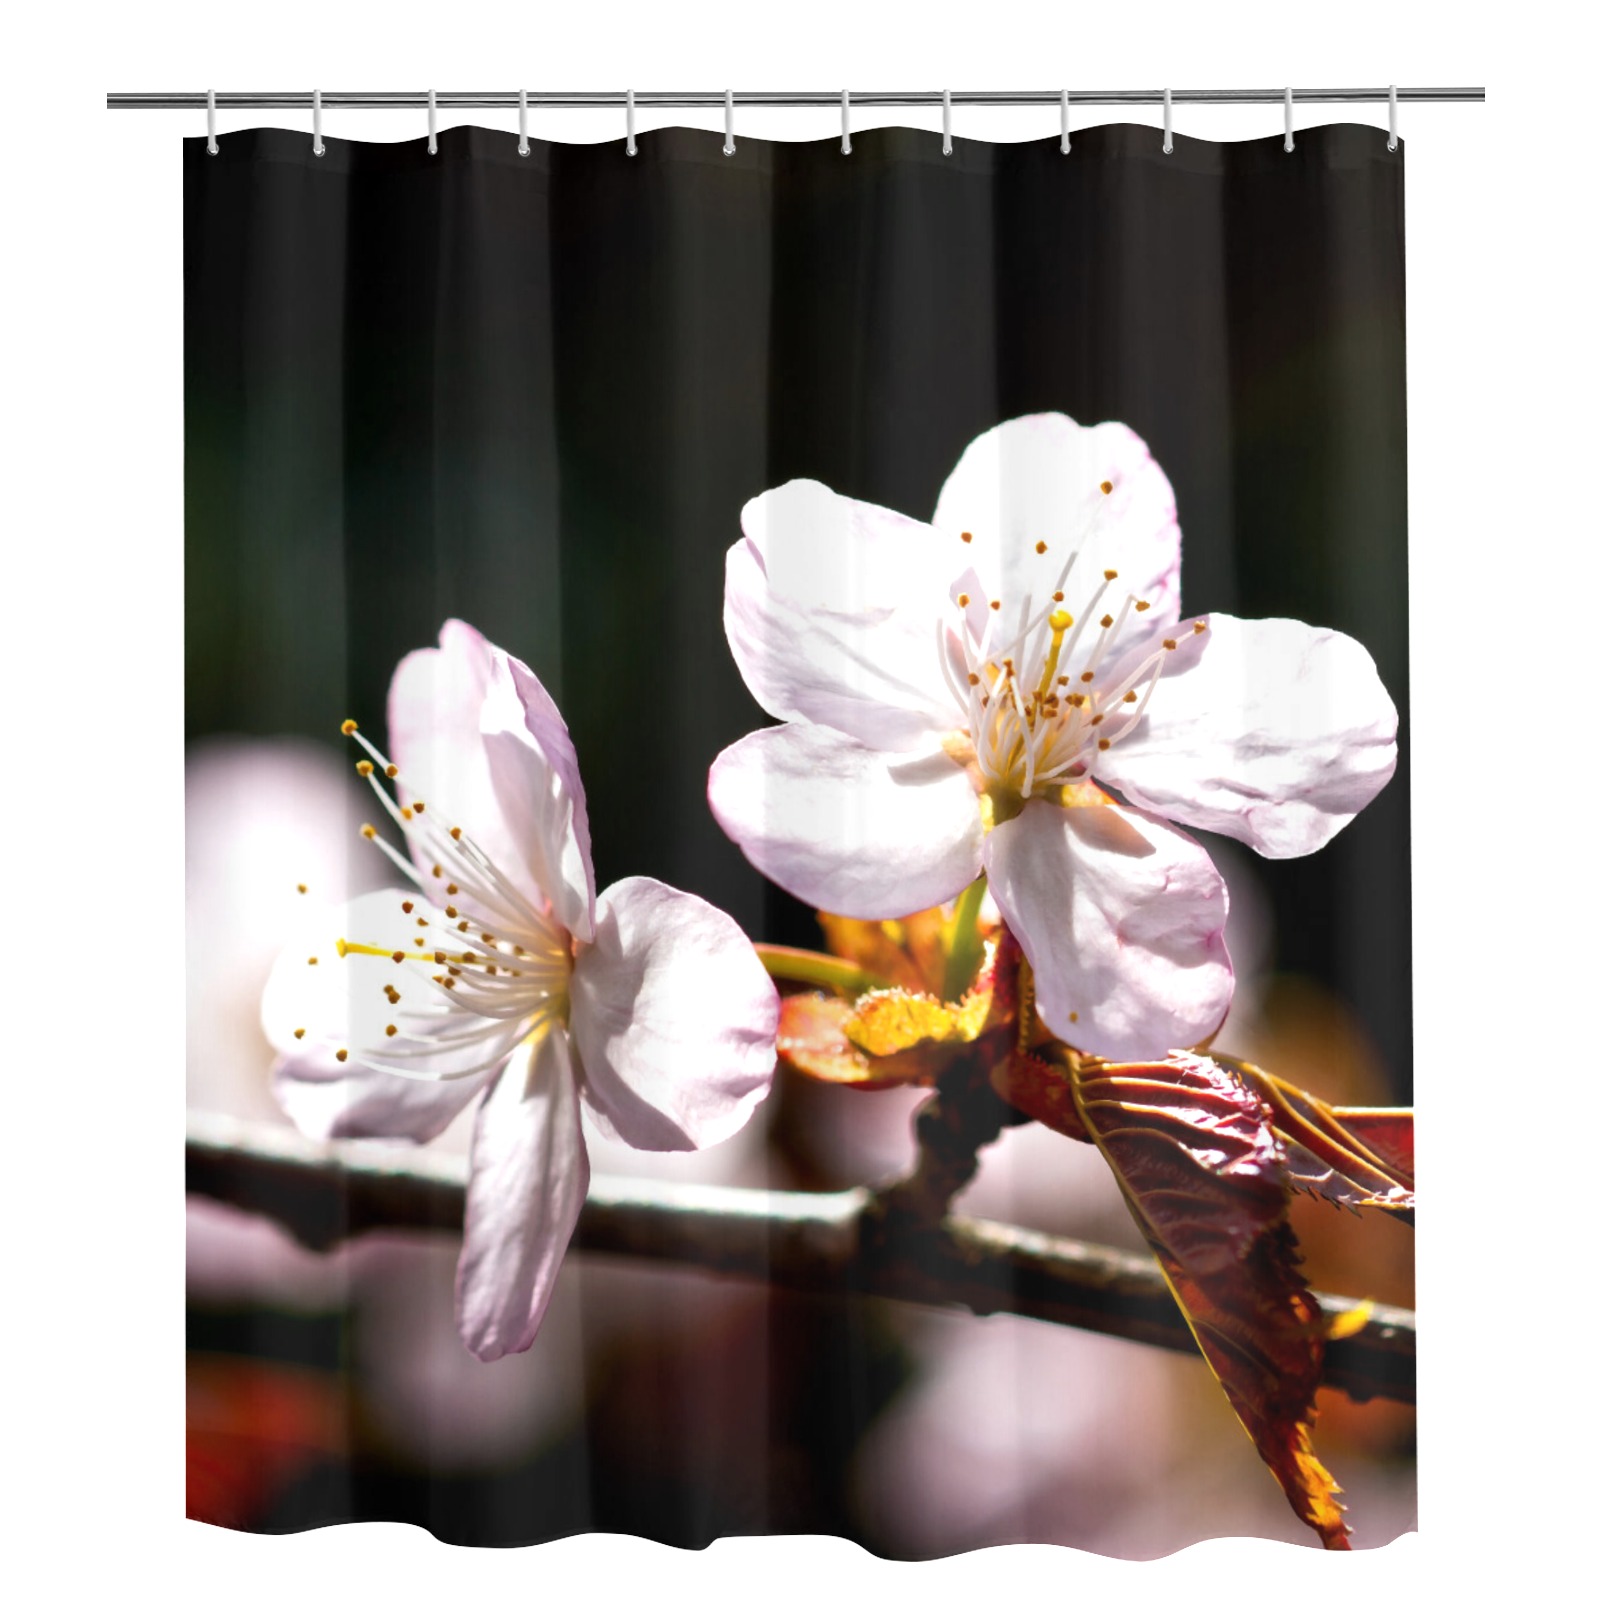 Sunlit sakura flowers. Play of light and shadows. Shower Curtain 72"x84"